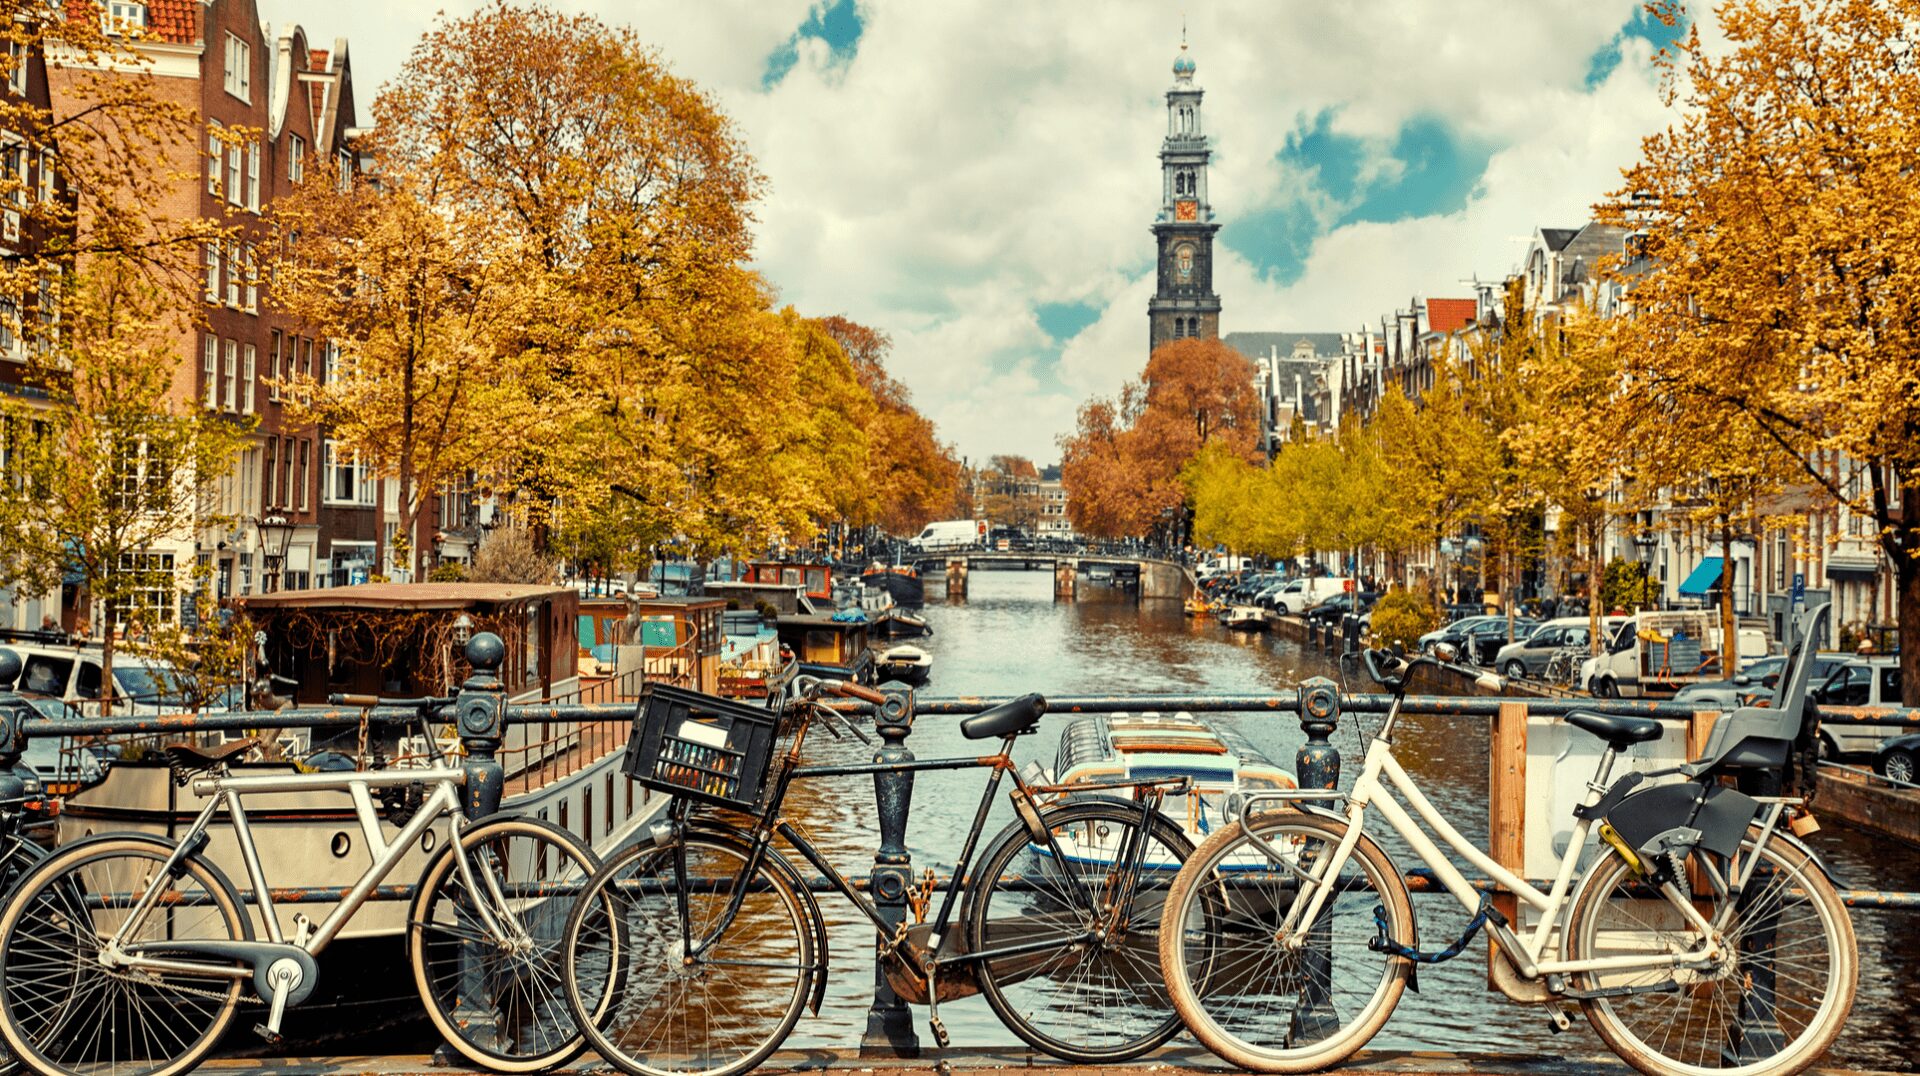 90 percent of Amsterdam households own a bike 